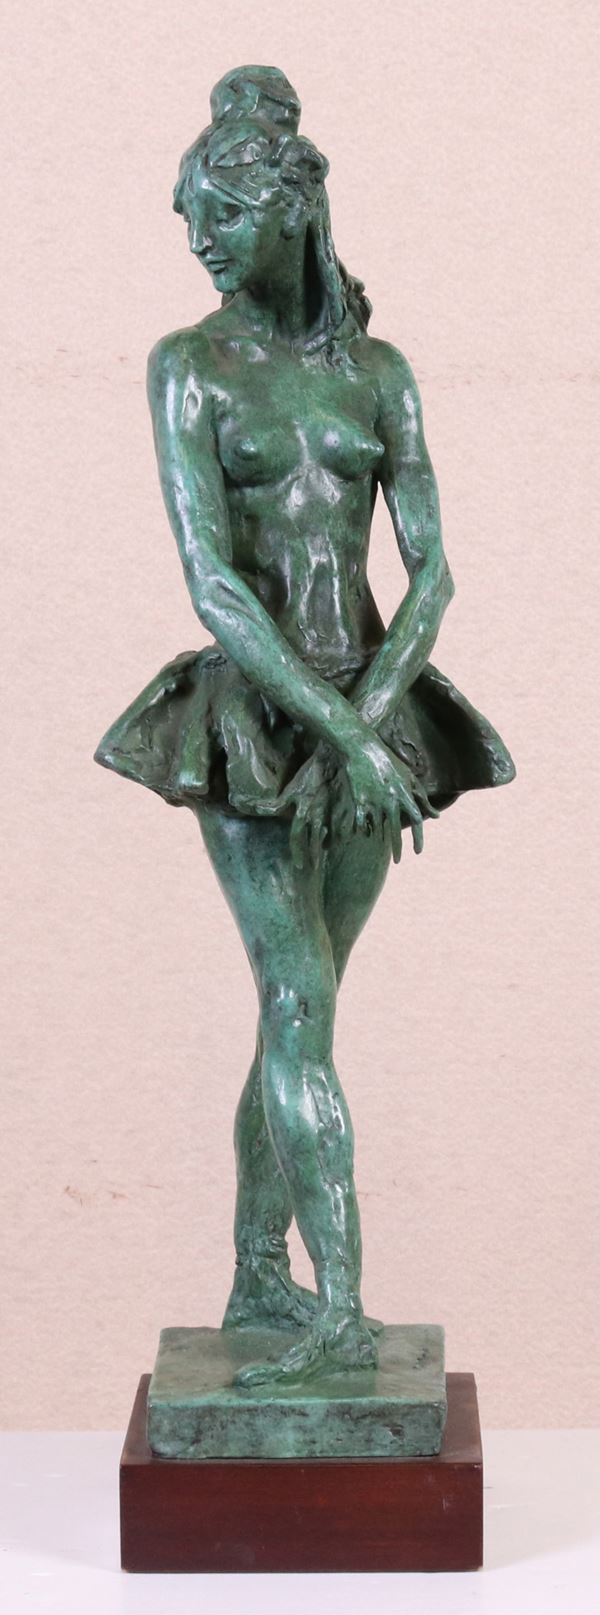 Francesco Messina : Ballerina  - Scultura in bronzo, multiplo, es. 100/150 - Auction CONTEMPORARY ART - I - Casa d'aste Farsettiarte